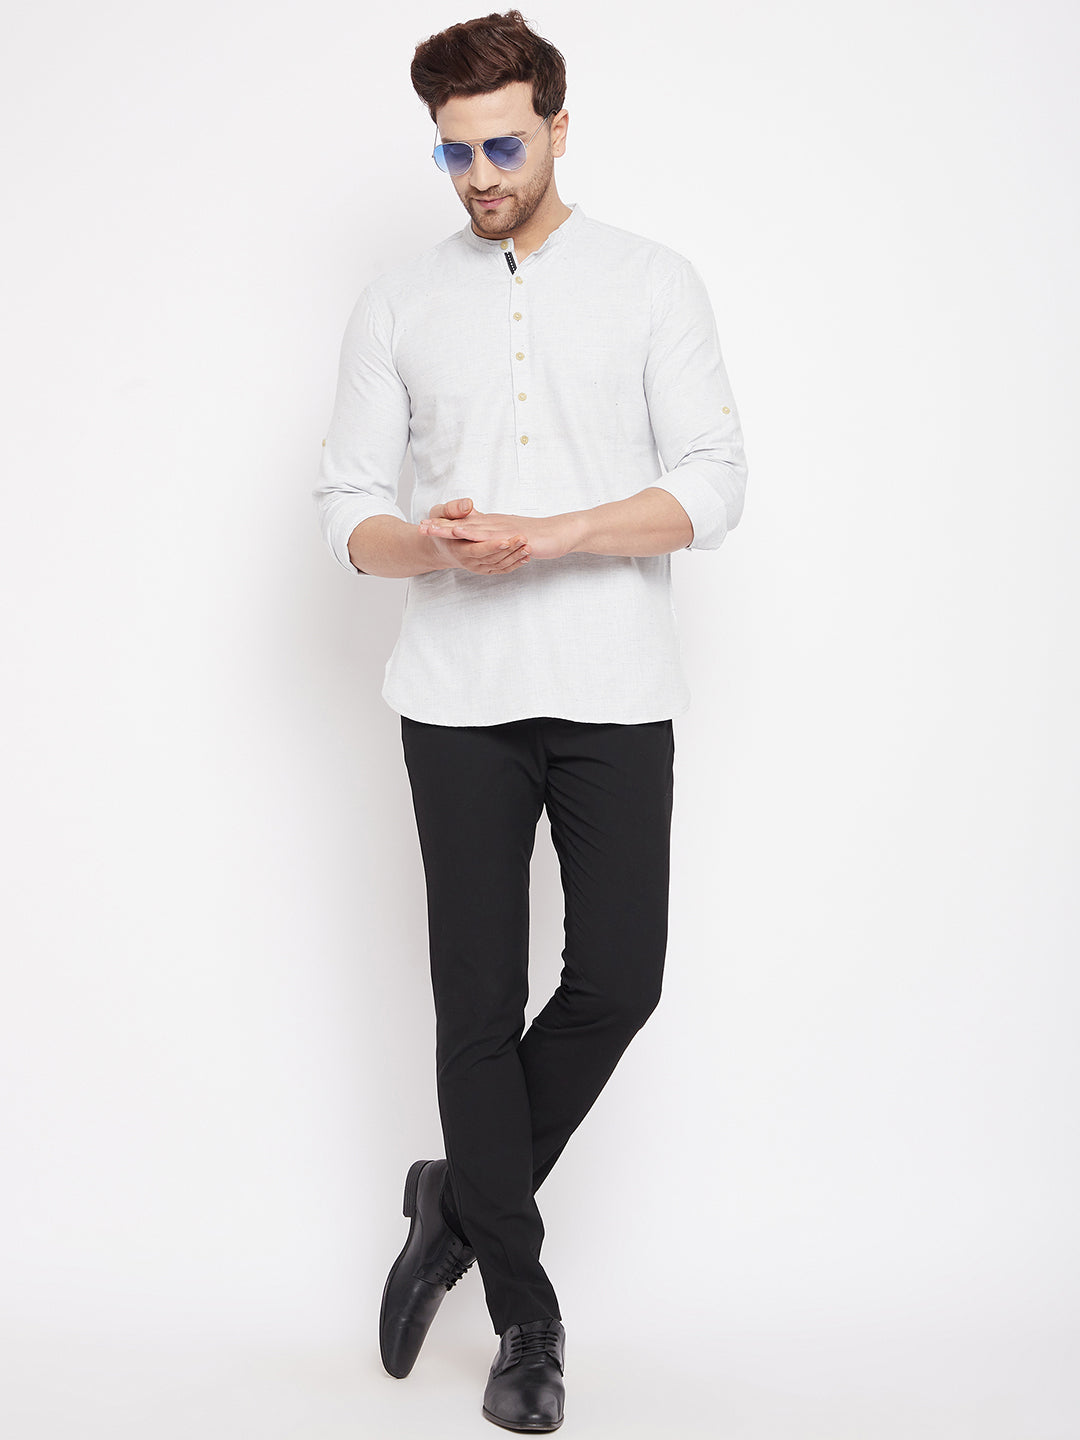 Men's Cream Color Short Kurta with Band Collar - Even Apparels